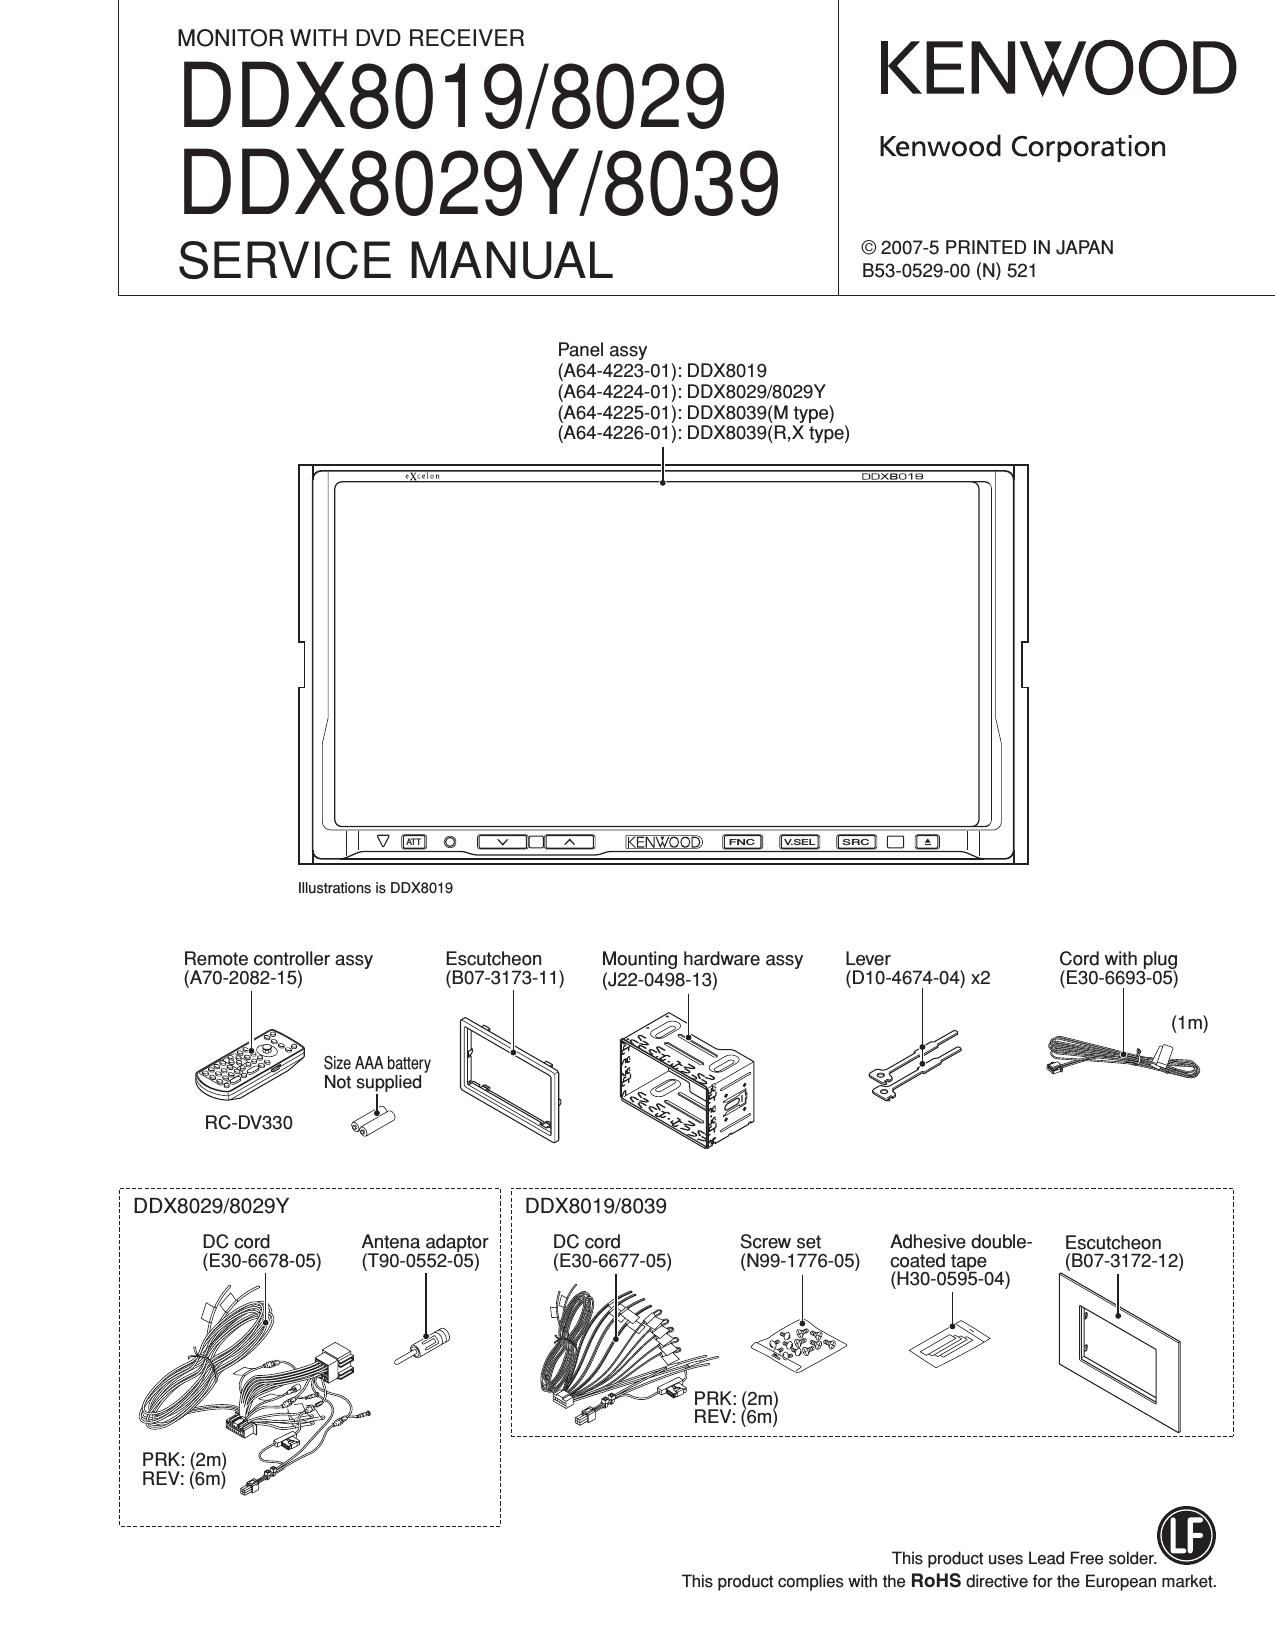 Kenwood DDX 8019 Service Manual